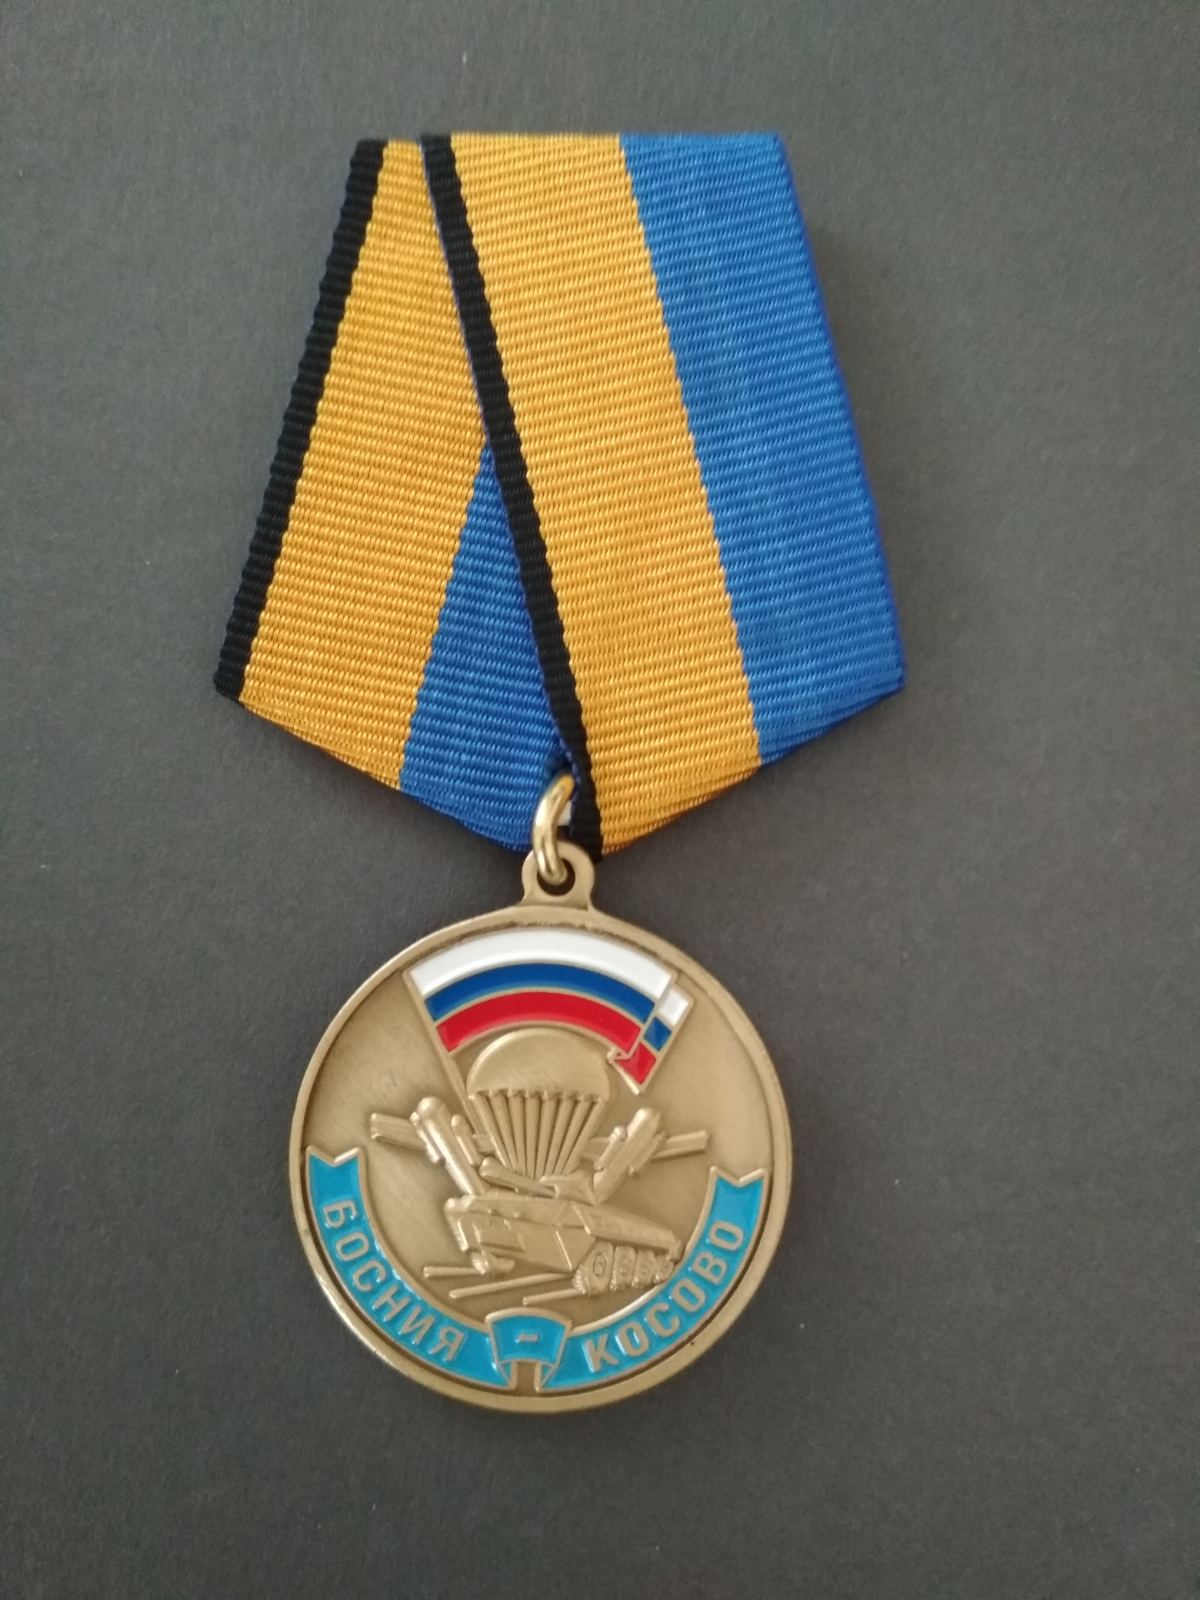 Медаль "Босния-Косово". Участнику марш-броска.